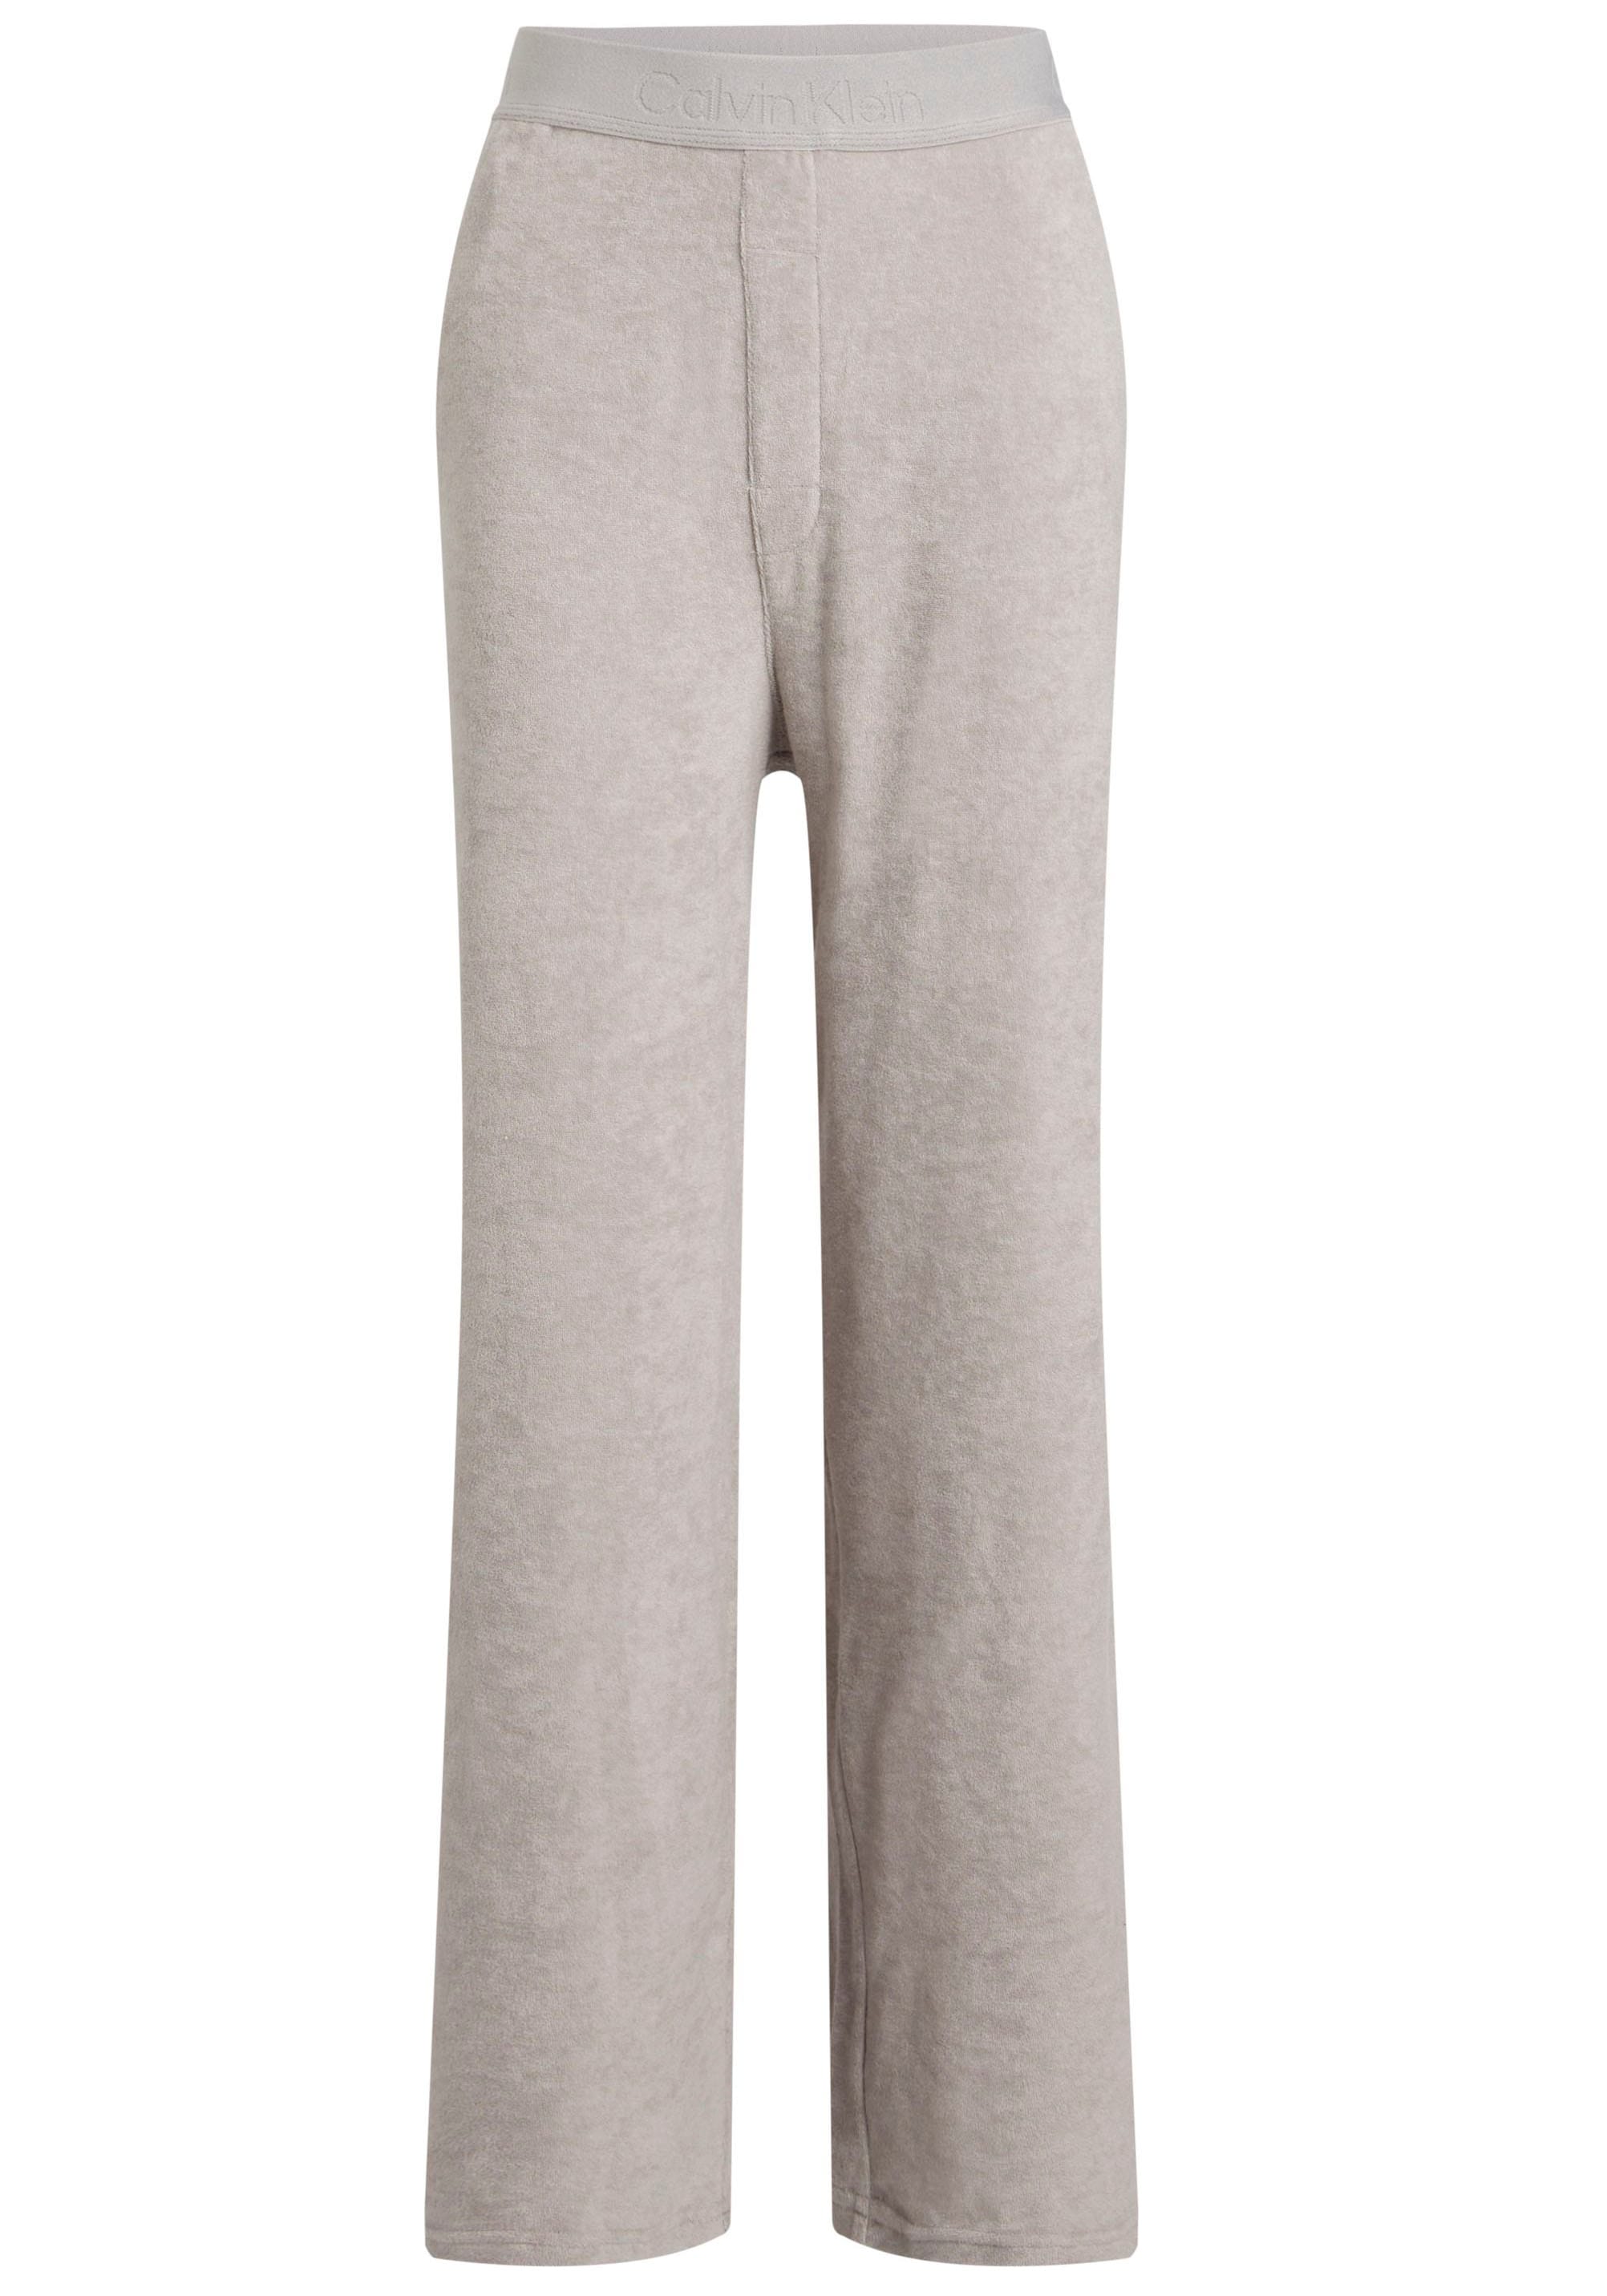 Calvin Klein Pyjamahose OTTOversand bei »SLEEP Bein PANT«, weitem mit